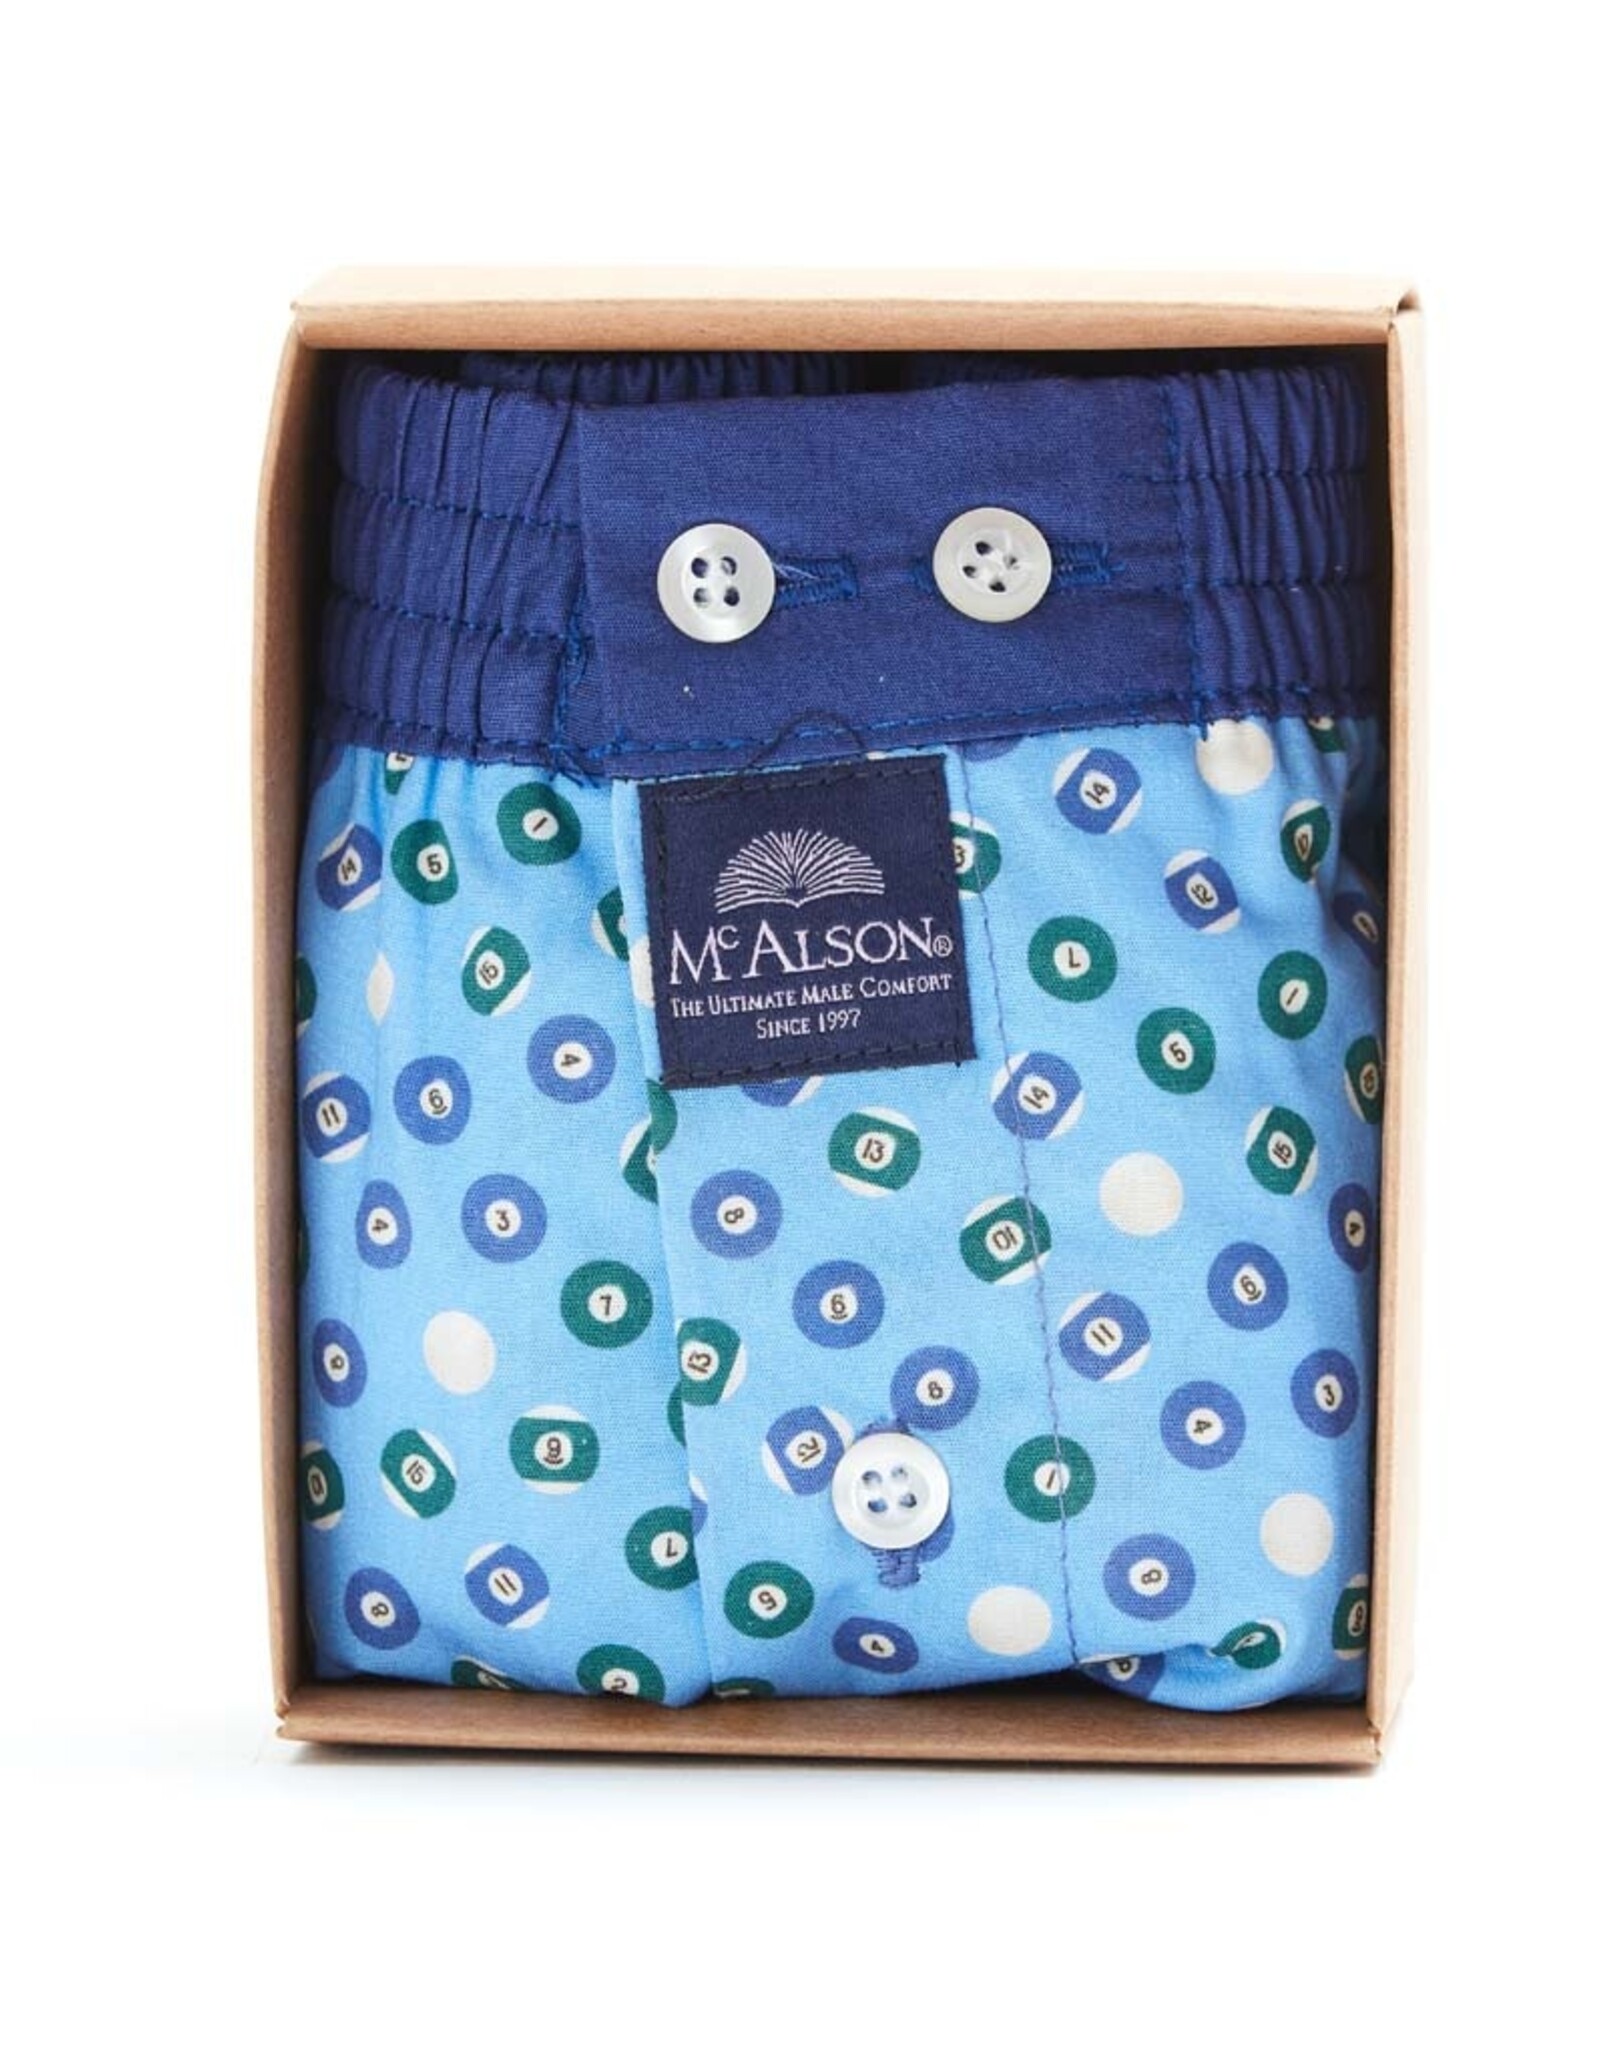 Mc Alson Mc Alson boxer short billiards light blue M4838